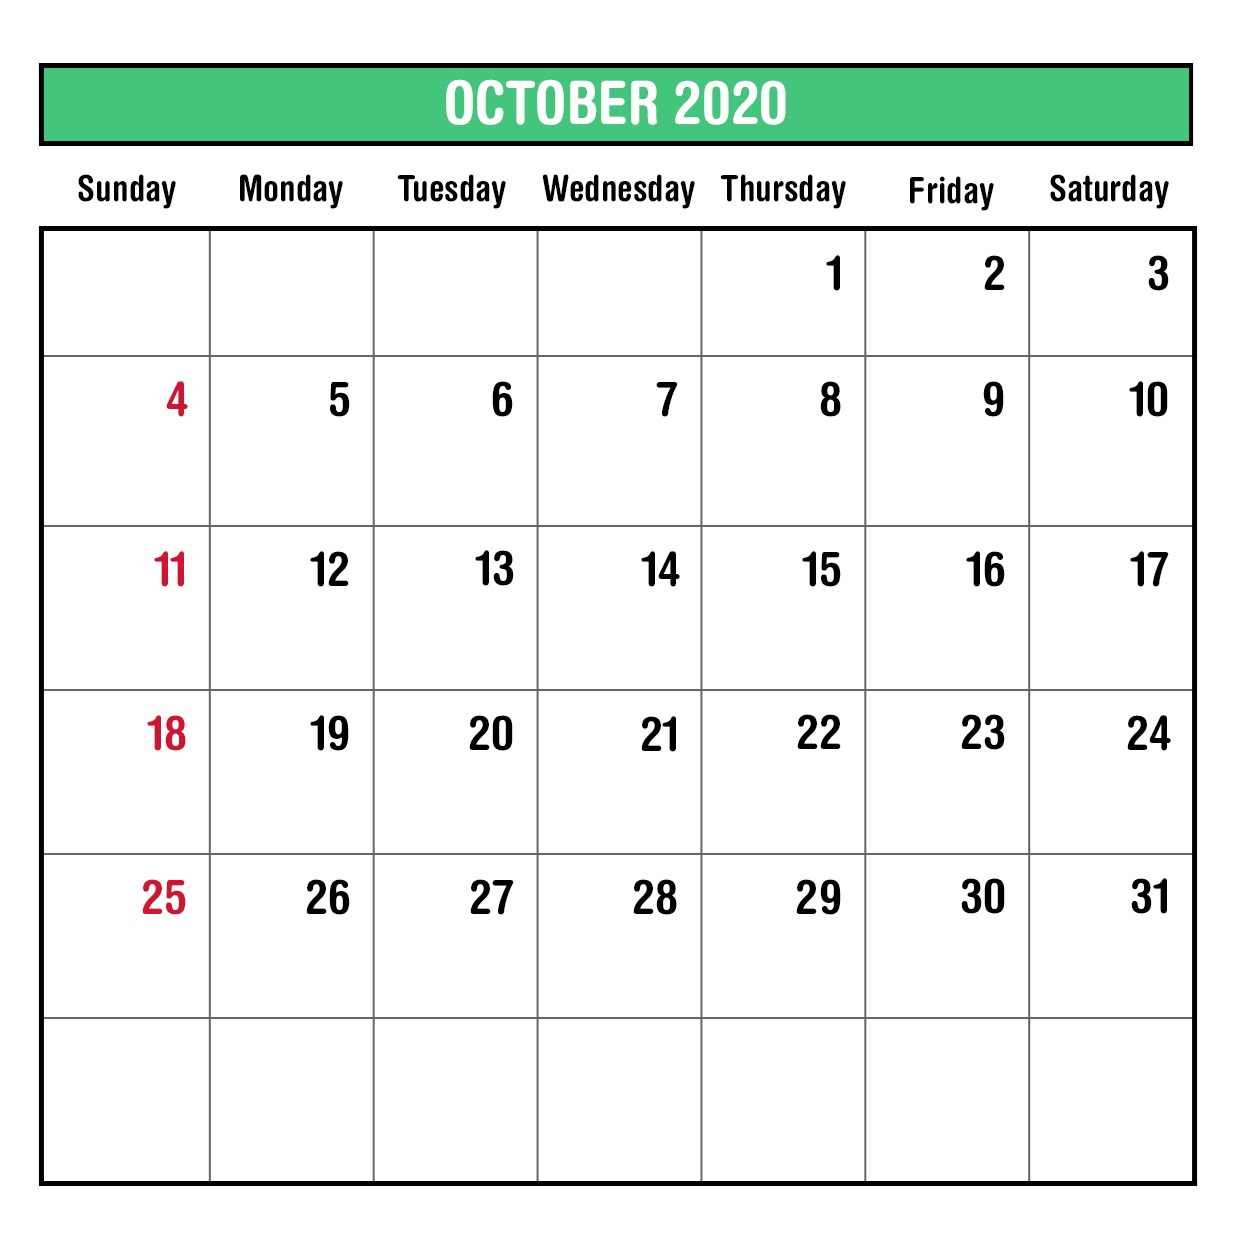 October Monthly Calendar